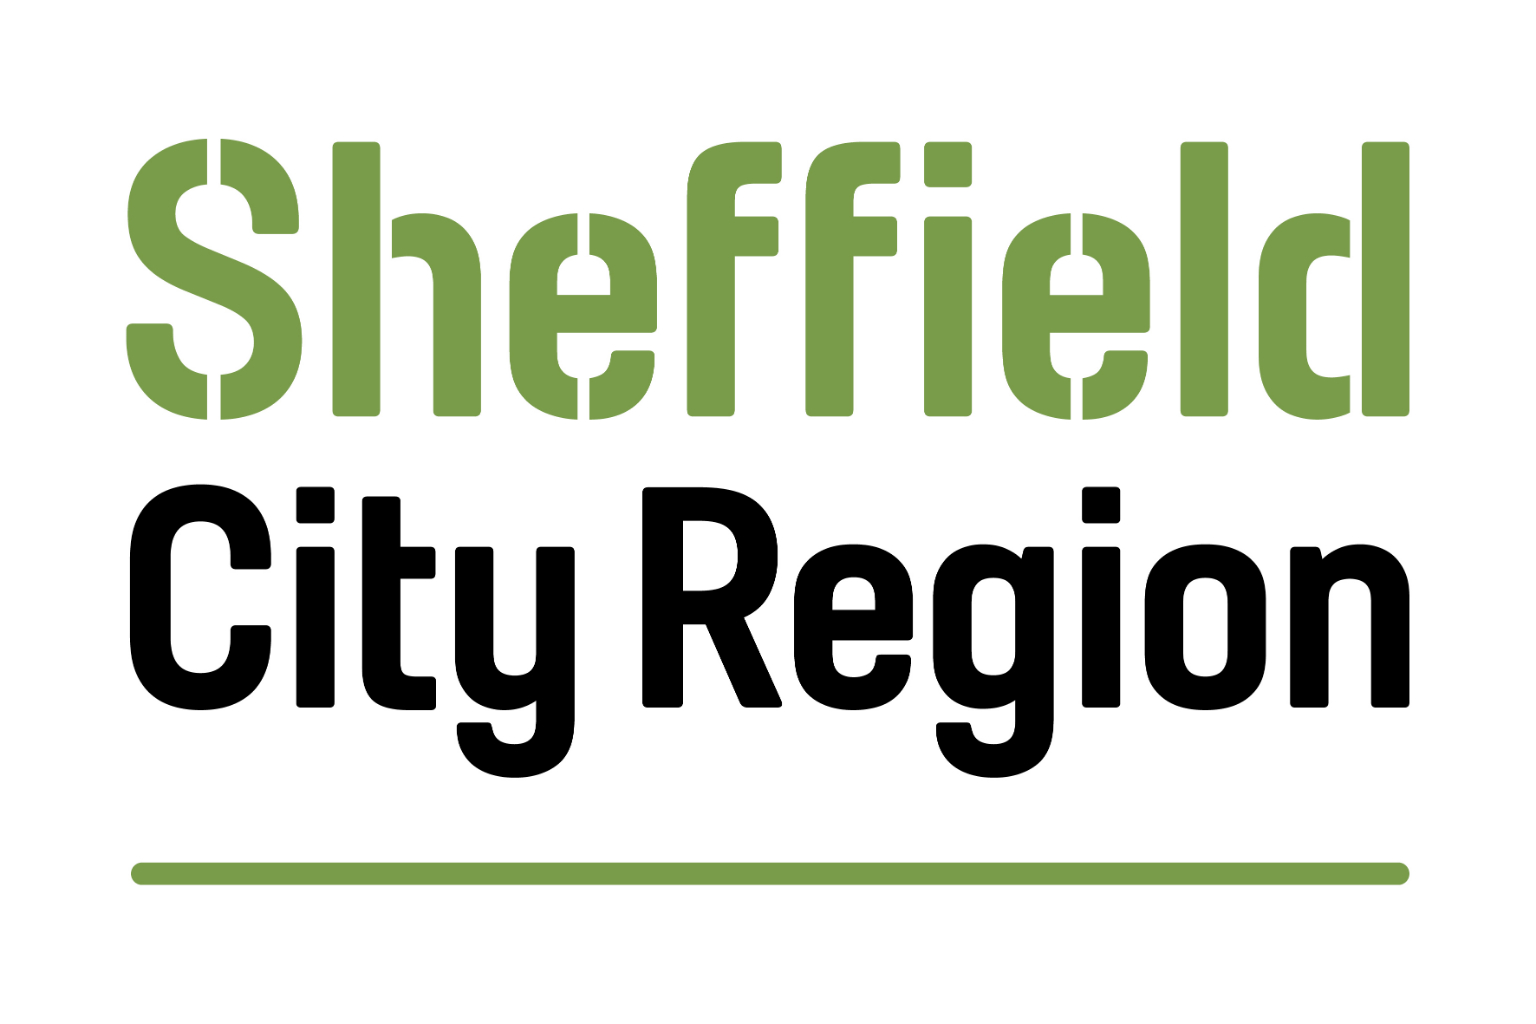 Sheffield City Region